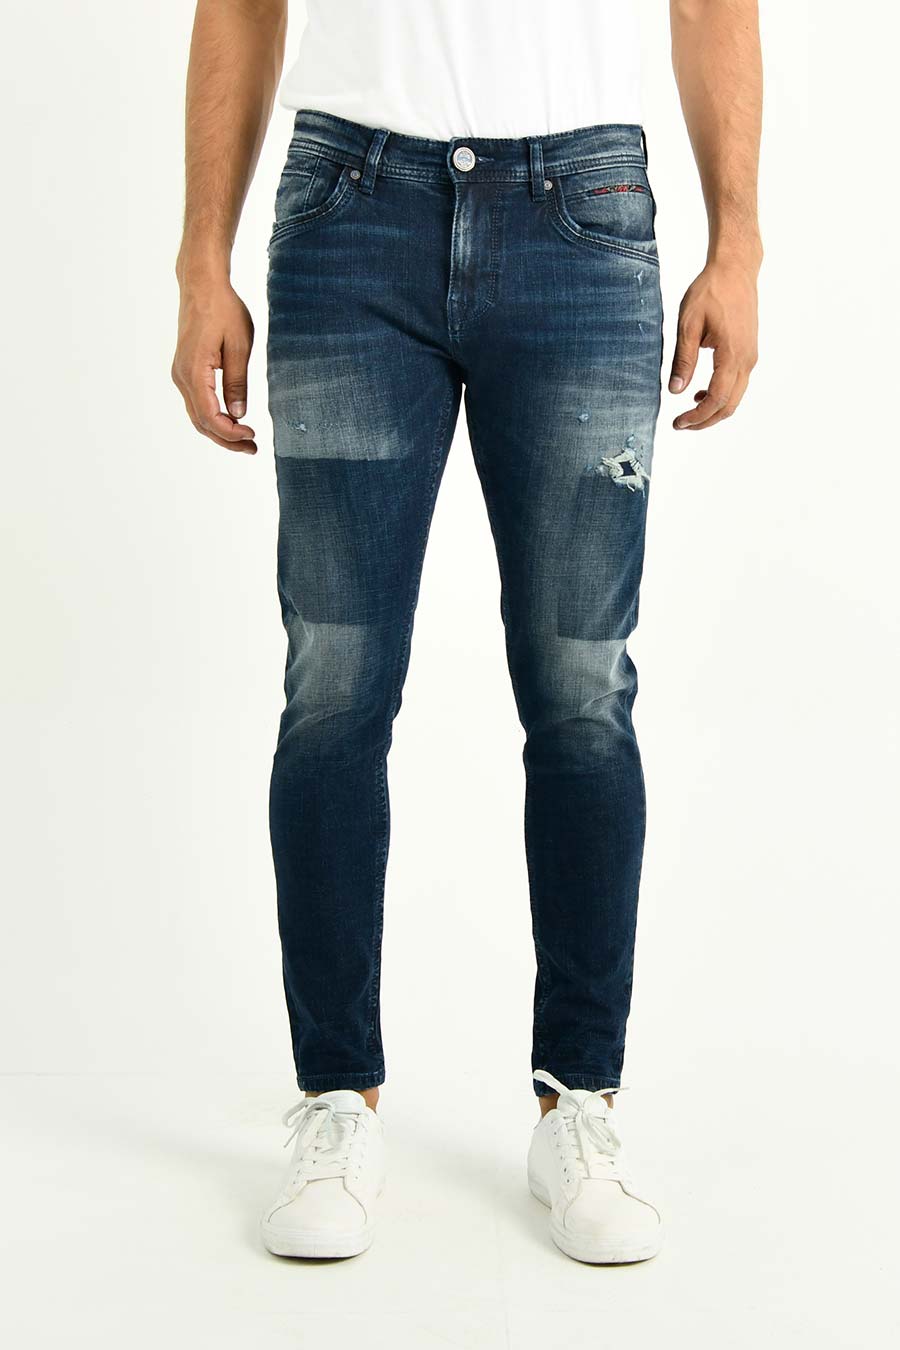 Men’s Denim Jeans-RJ3997